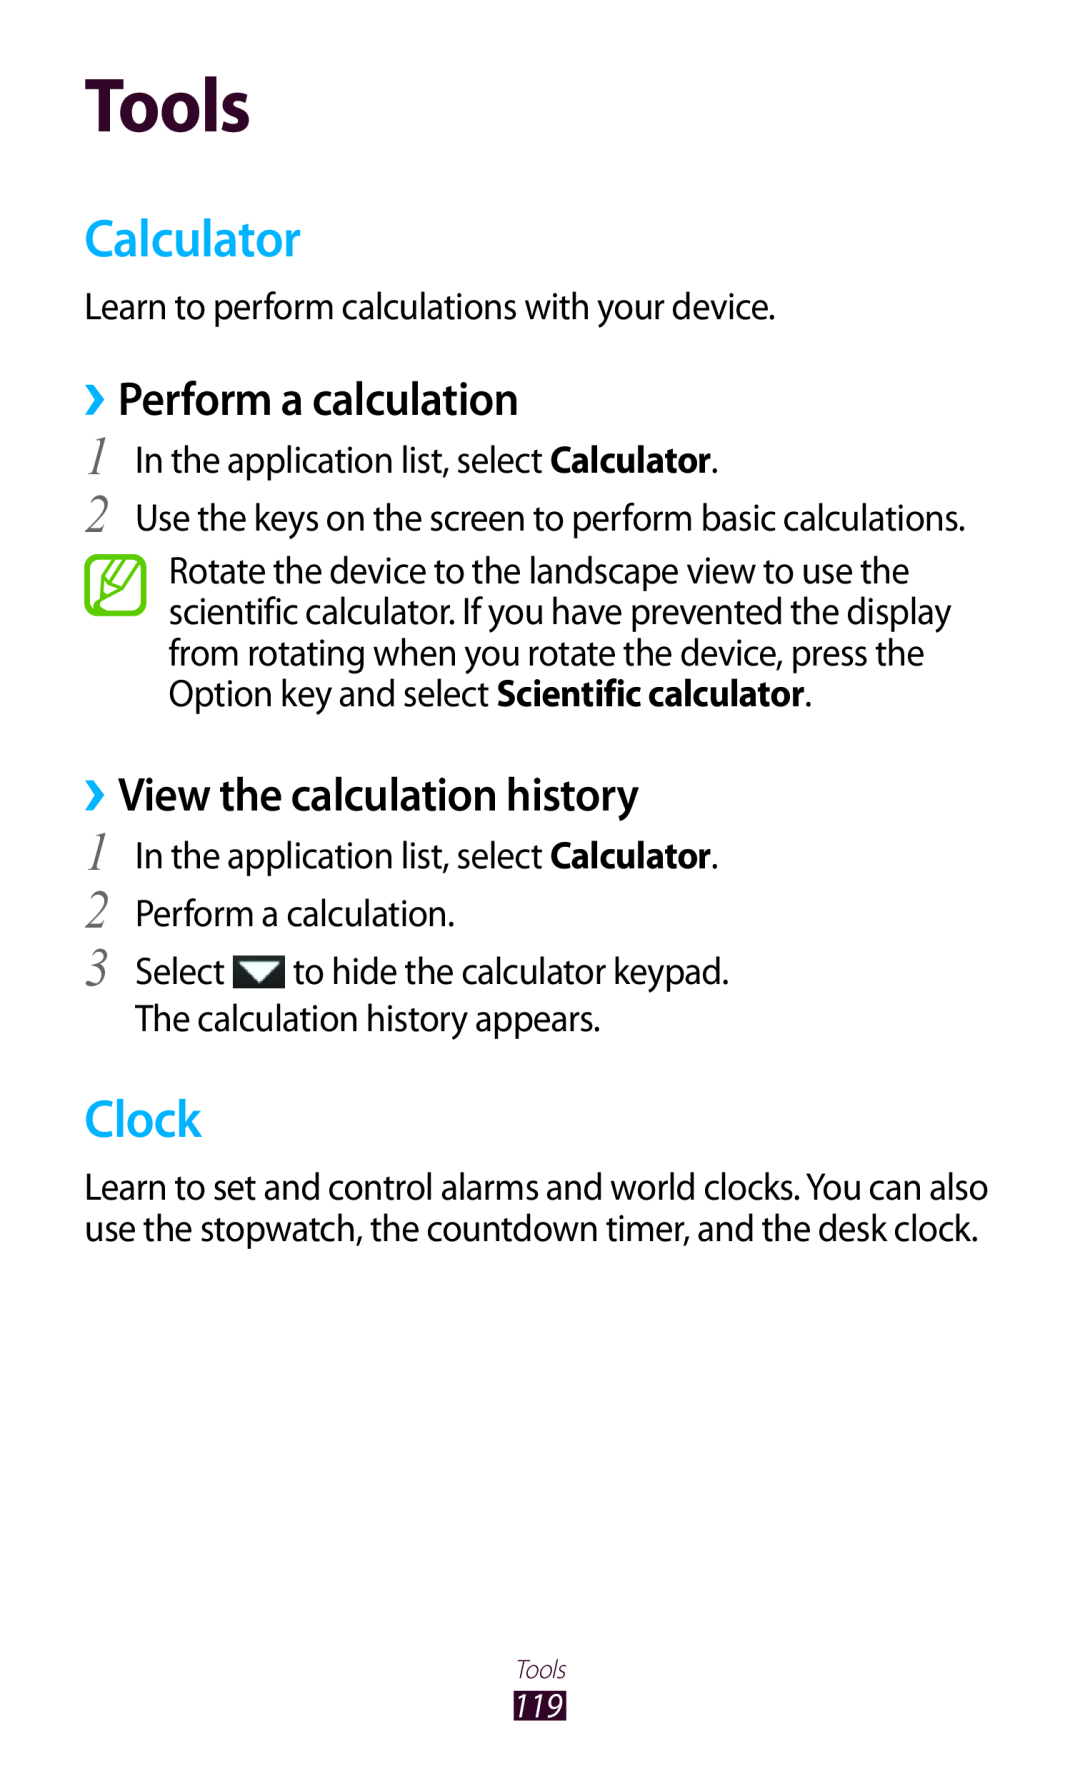 Samsung GT-I8160OKAOPT, GT-I8160ZWADBT Tools, Calculator, Clock, ››Perform a calculation, ››View the calculation history 